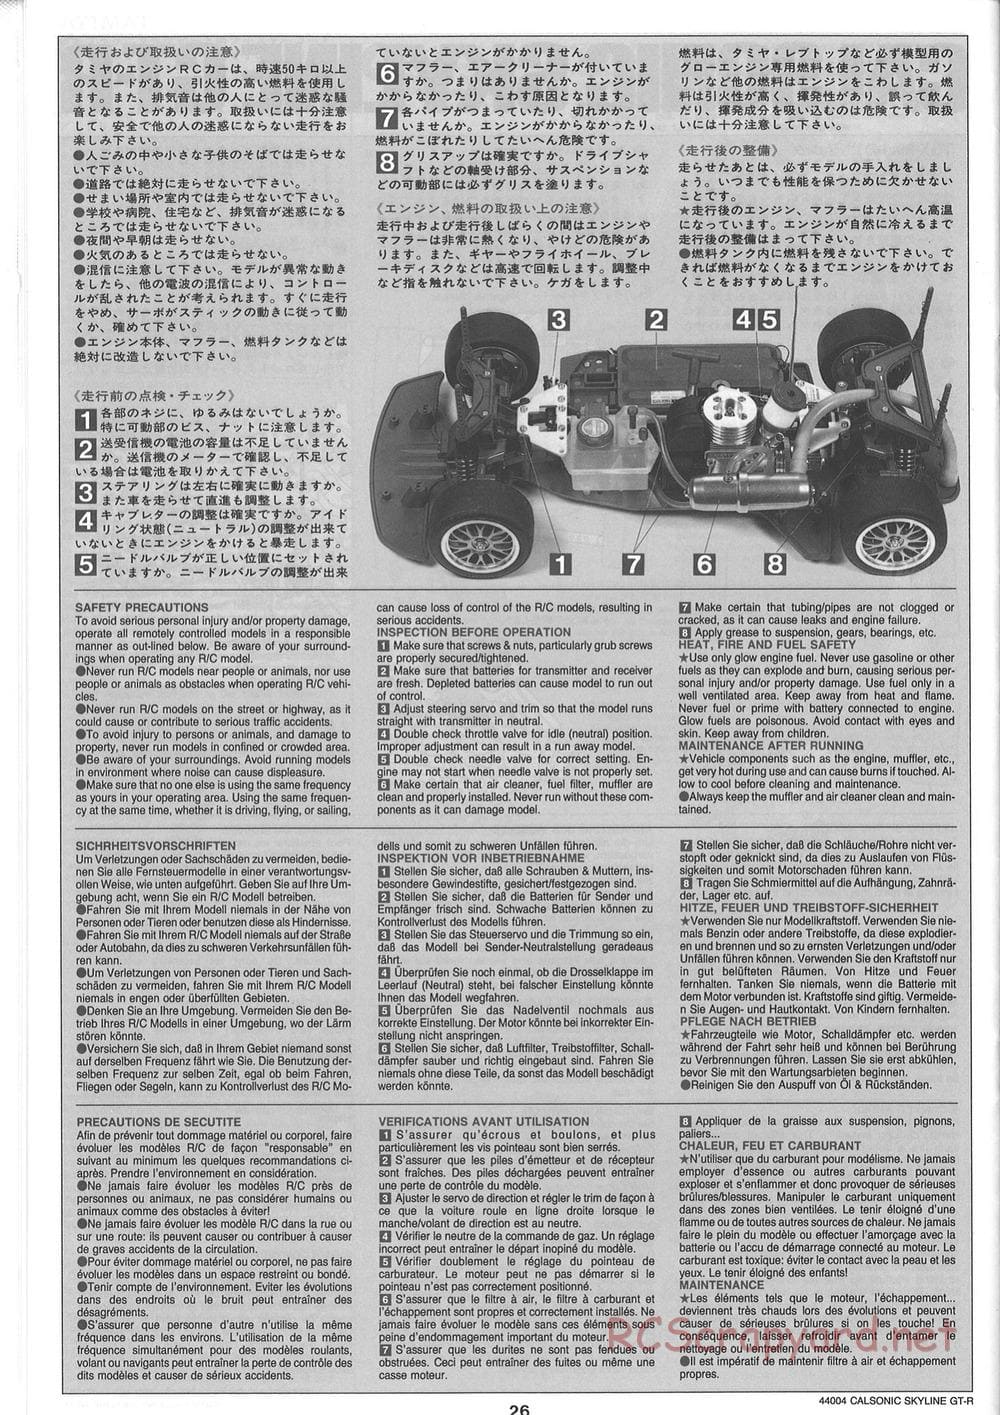 Tamiya - Calsonic GT-R - TGX Mk.1 Chassis - Manual - Page 26